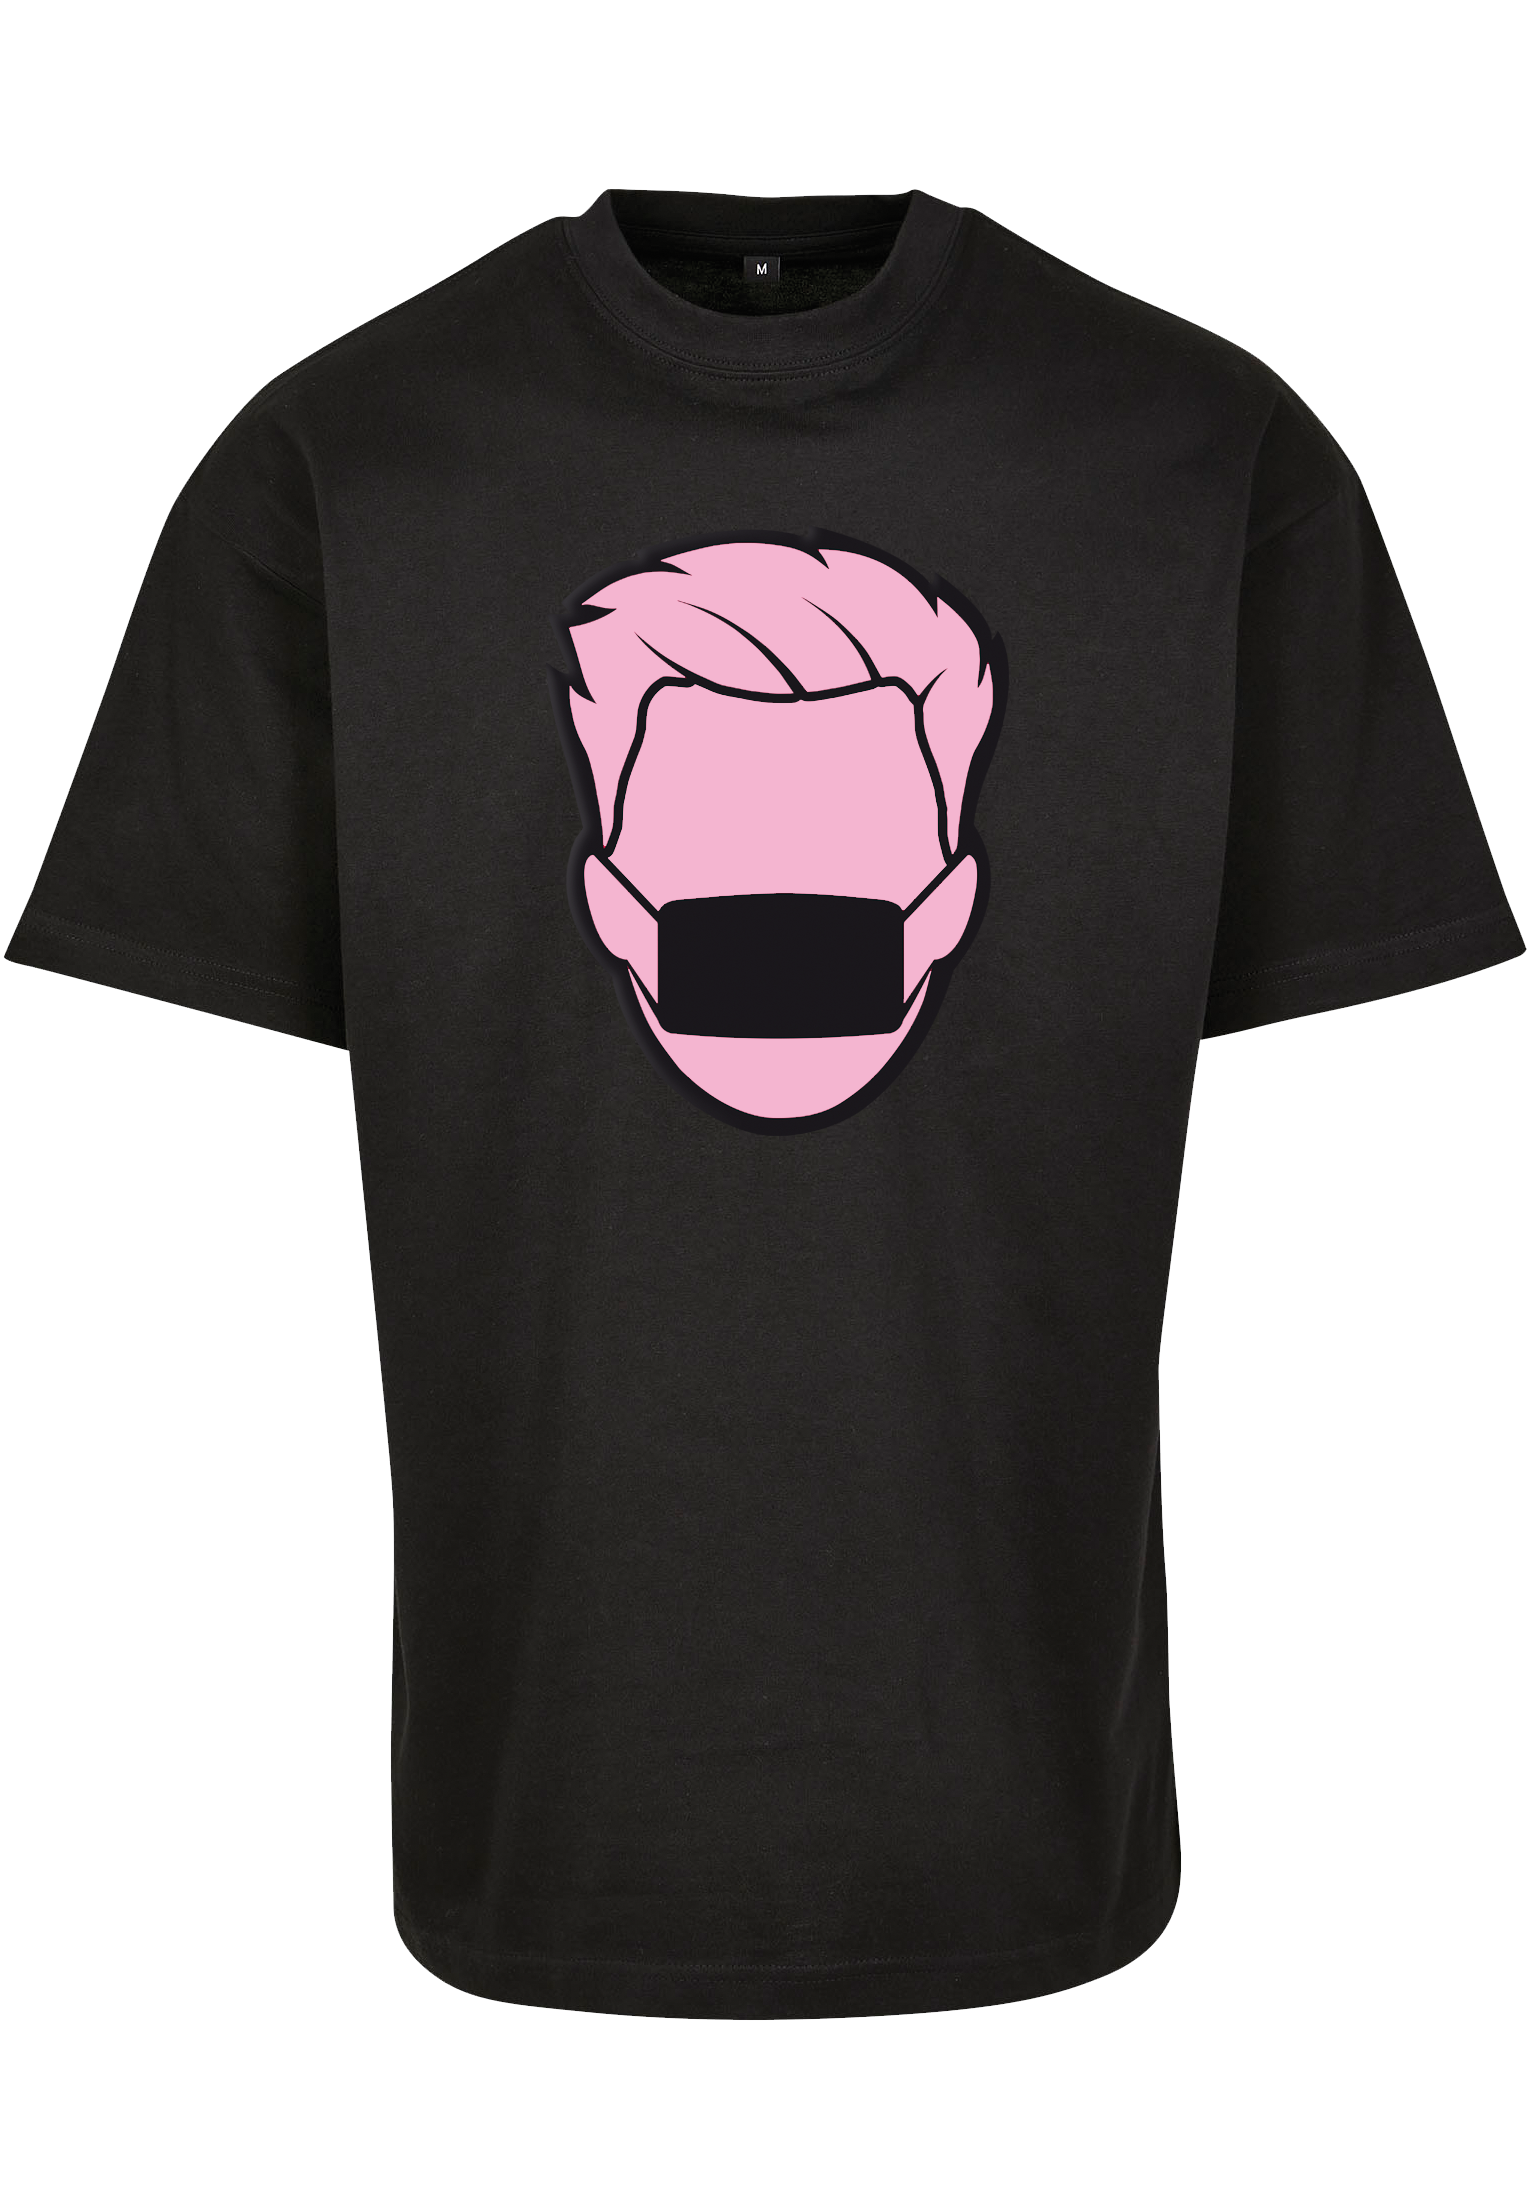 Pinkcreid black T-Shirt